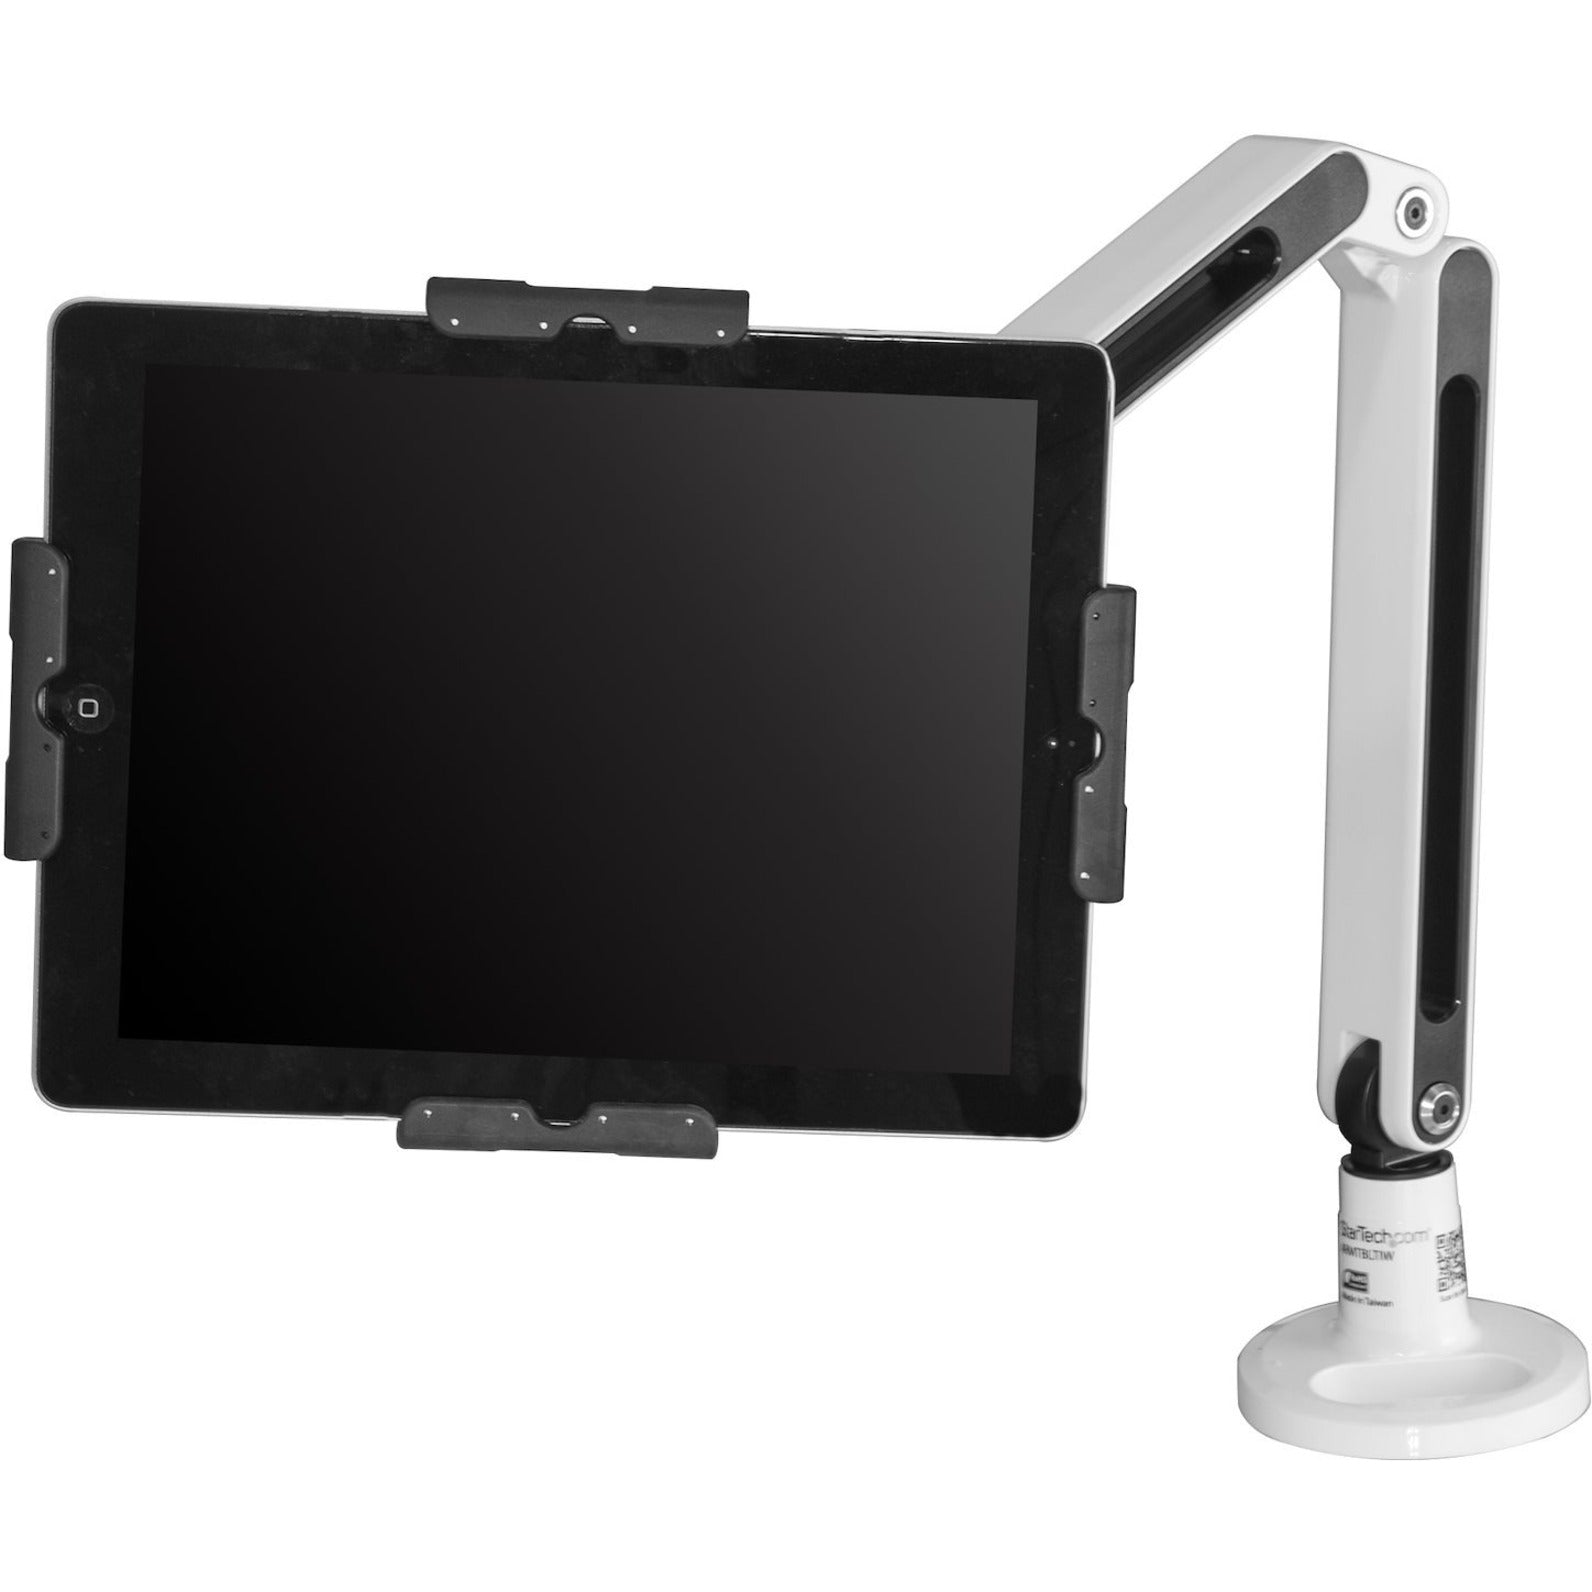 StarTech.com ARMTBLTIW Desk-Mount Tablet Arm - Articulating - For iPad or Android, Tilt, Swivel, Adjustable, White